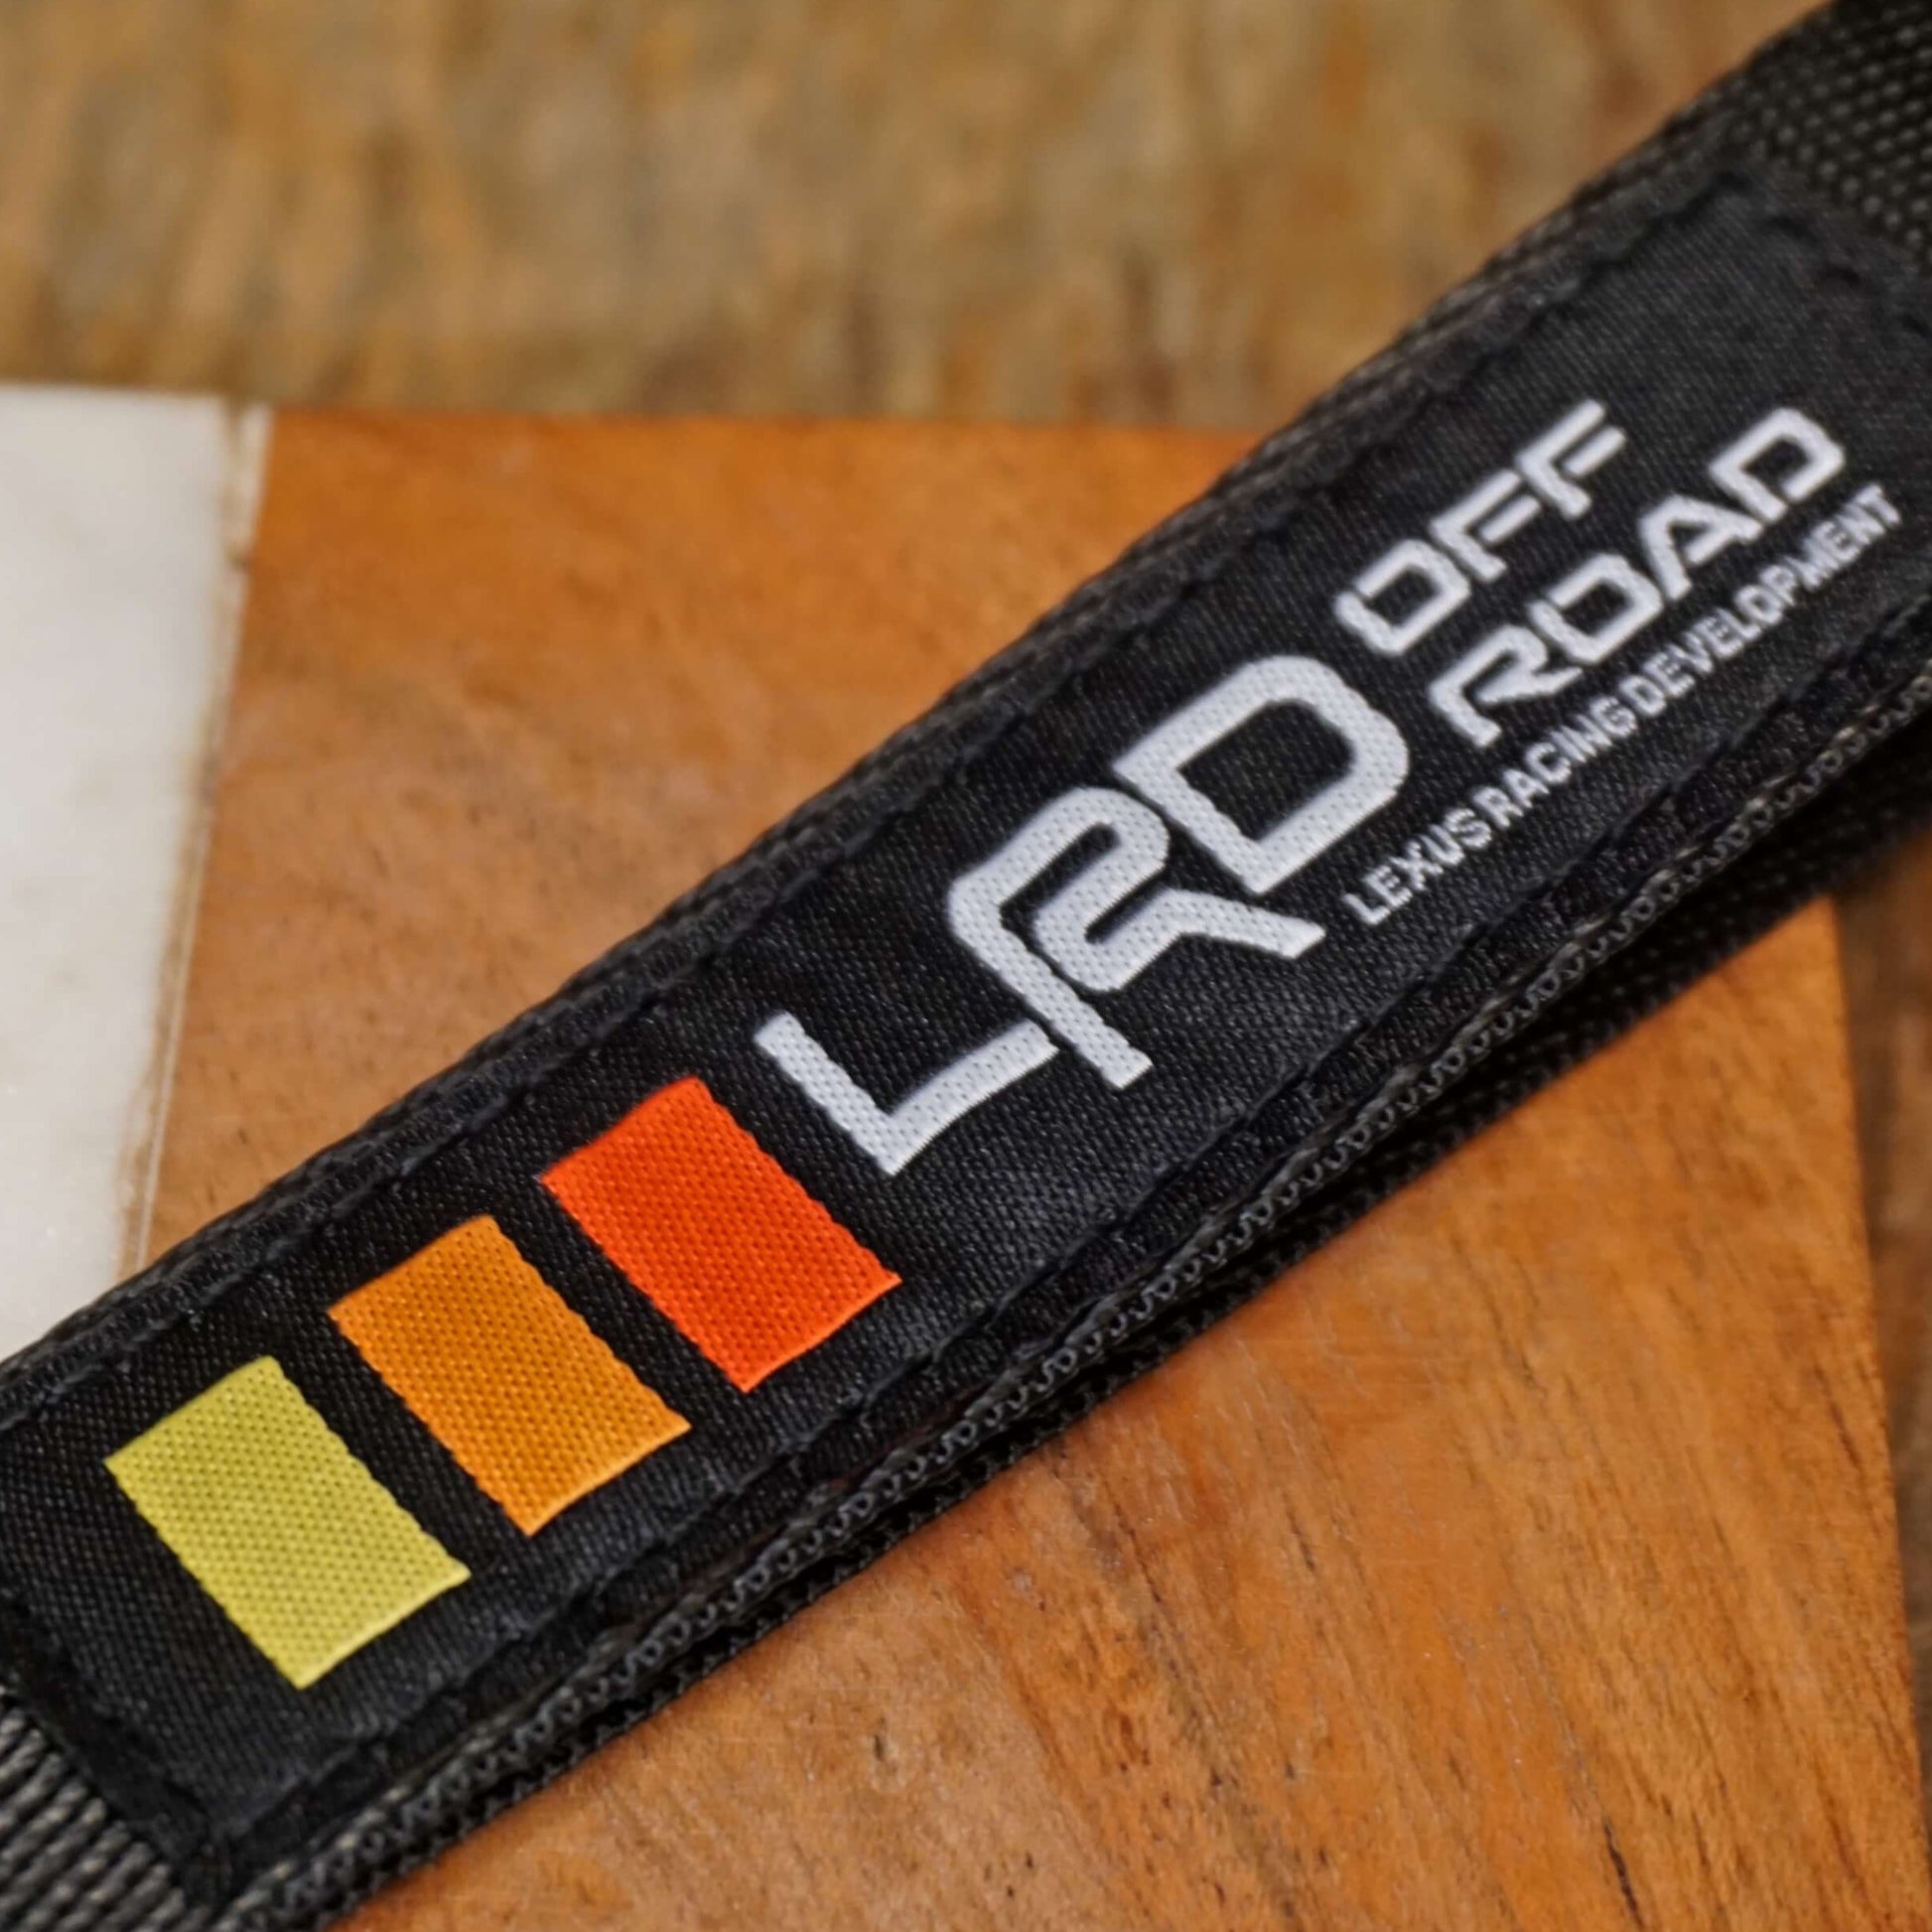 LRD Off Road Lexus Racing Development yellow orange red retro stripes lrd keychain lanyard wrist strap nylon black